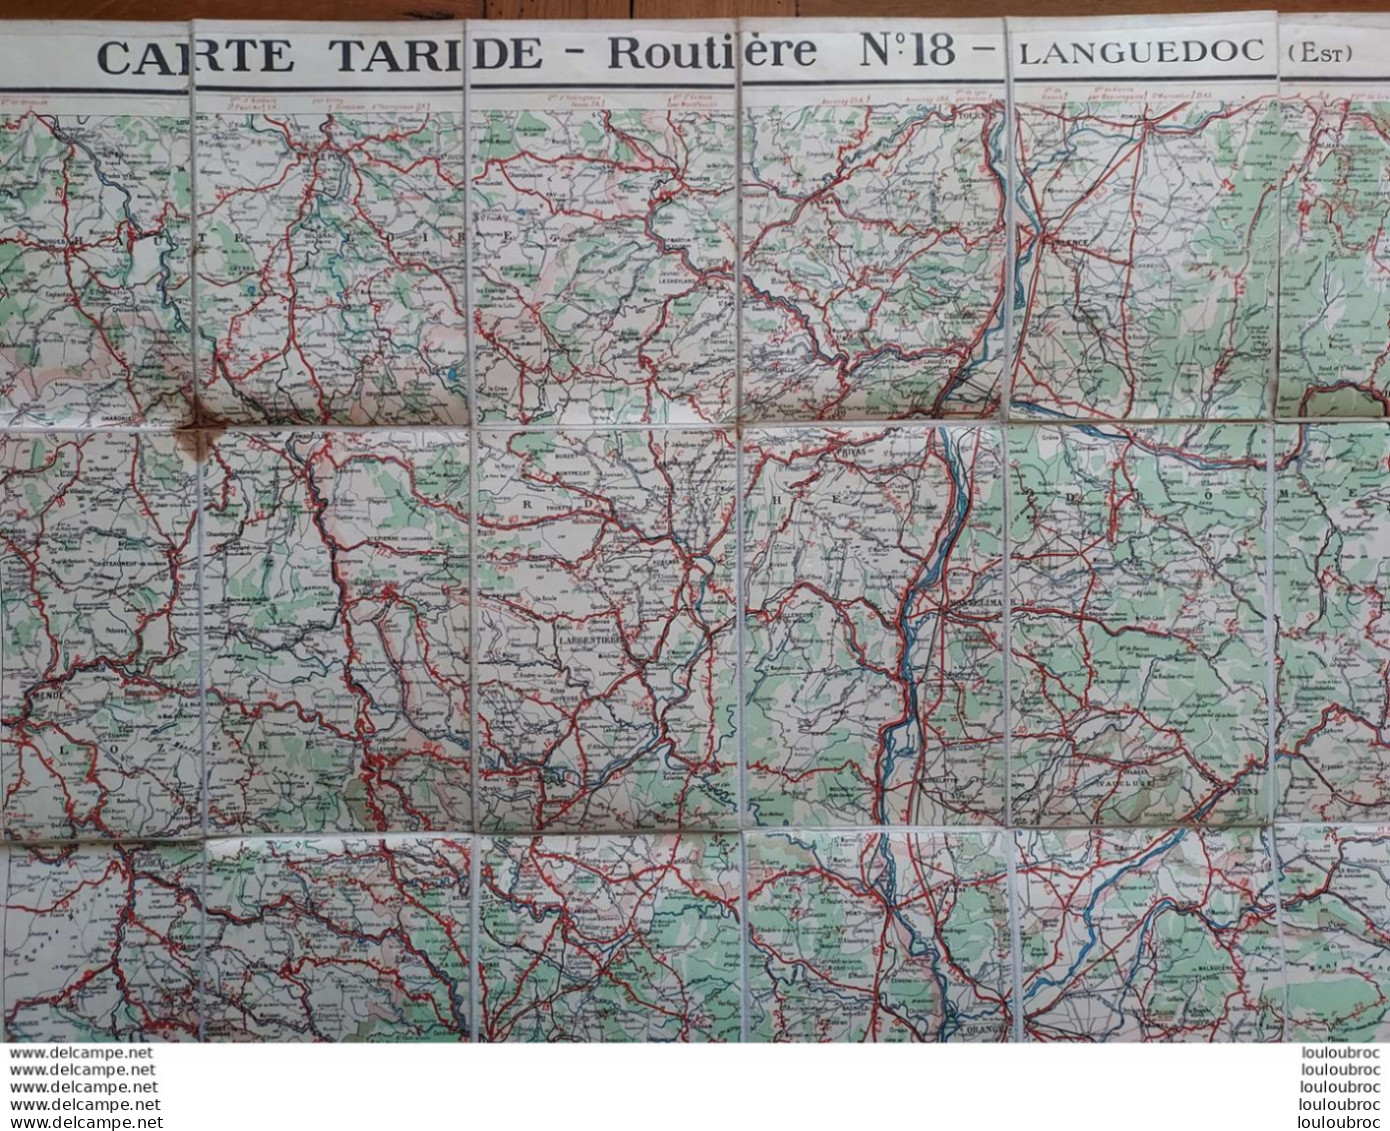 CARTE ROUTIERE TARIDE TOILEE N°18 LANGUEDOC EST - Roadmaps